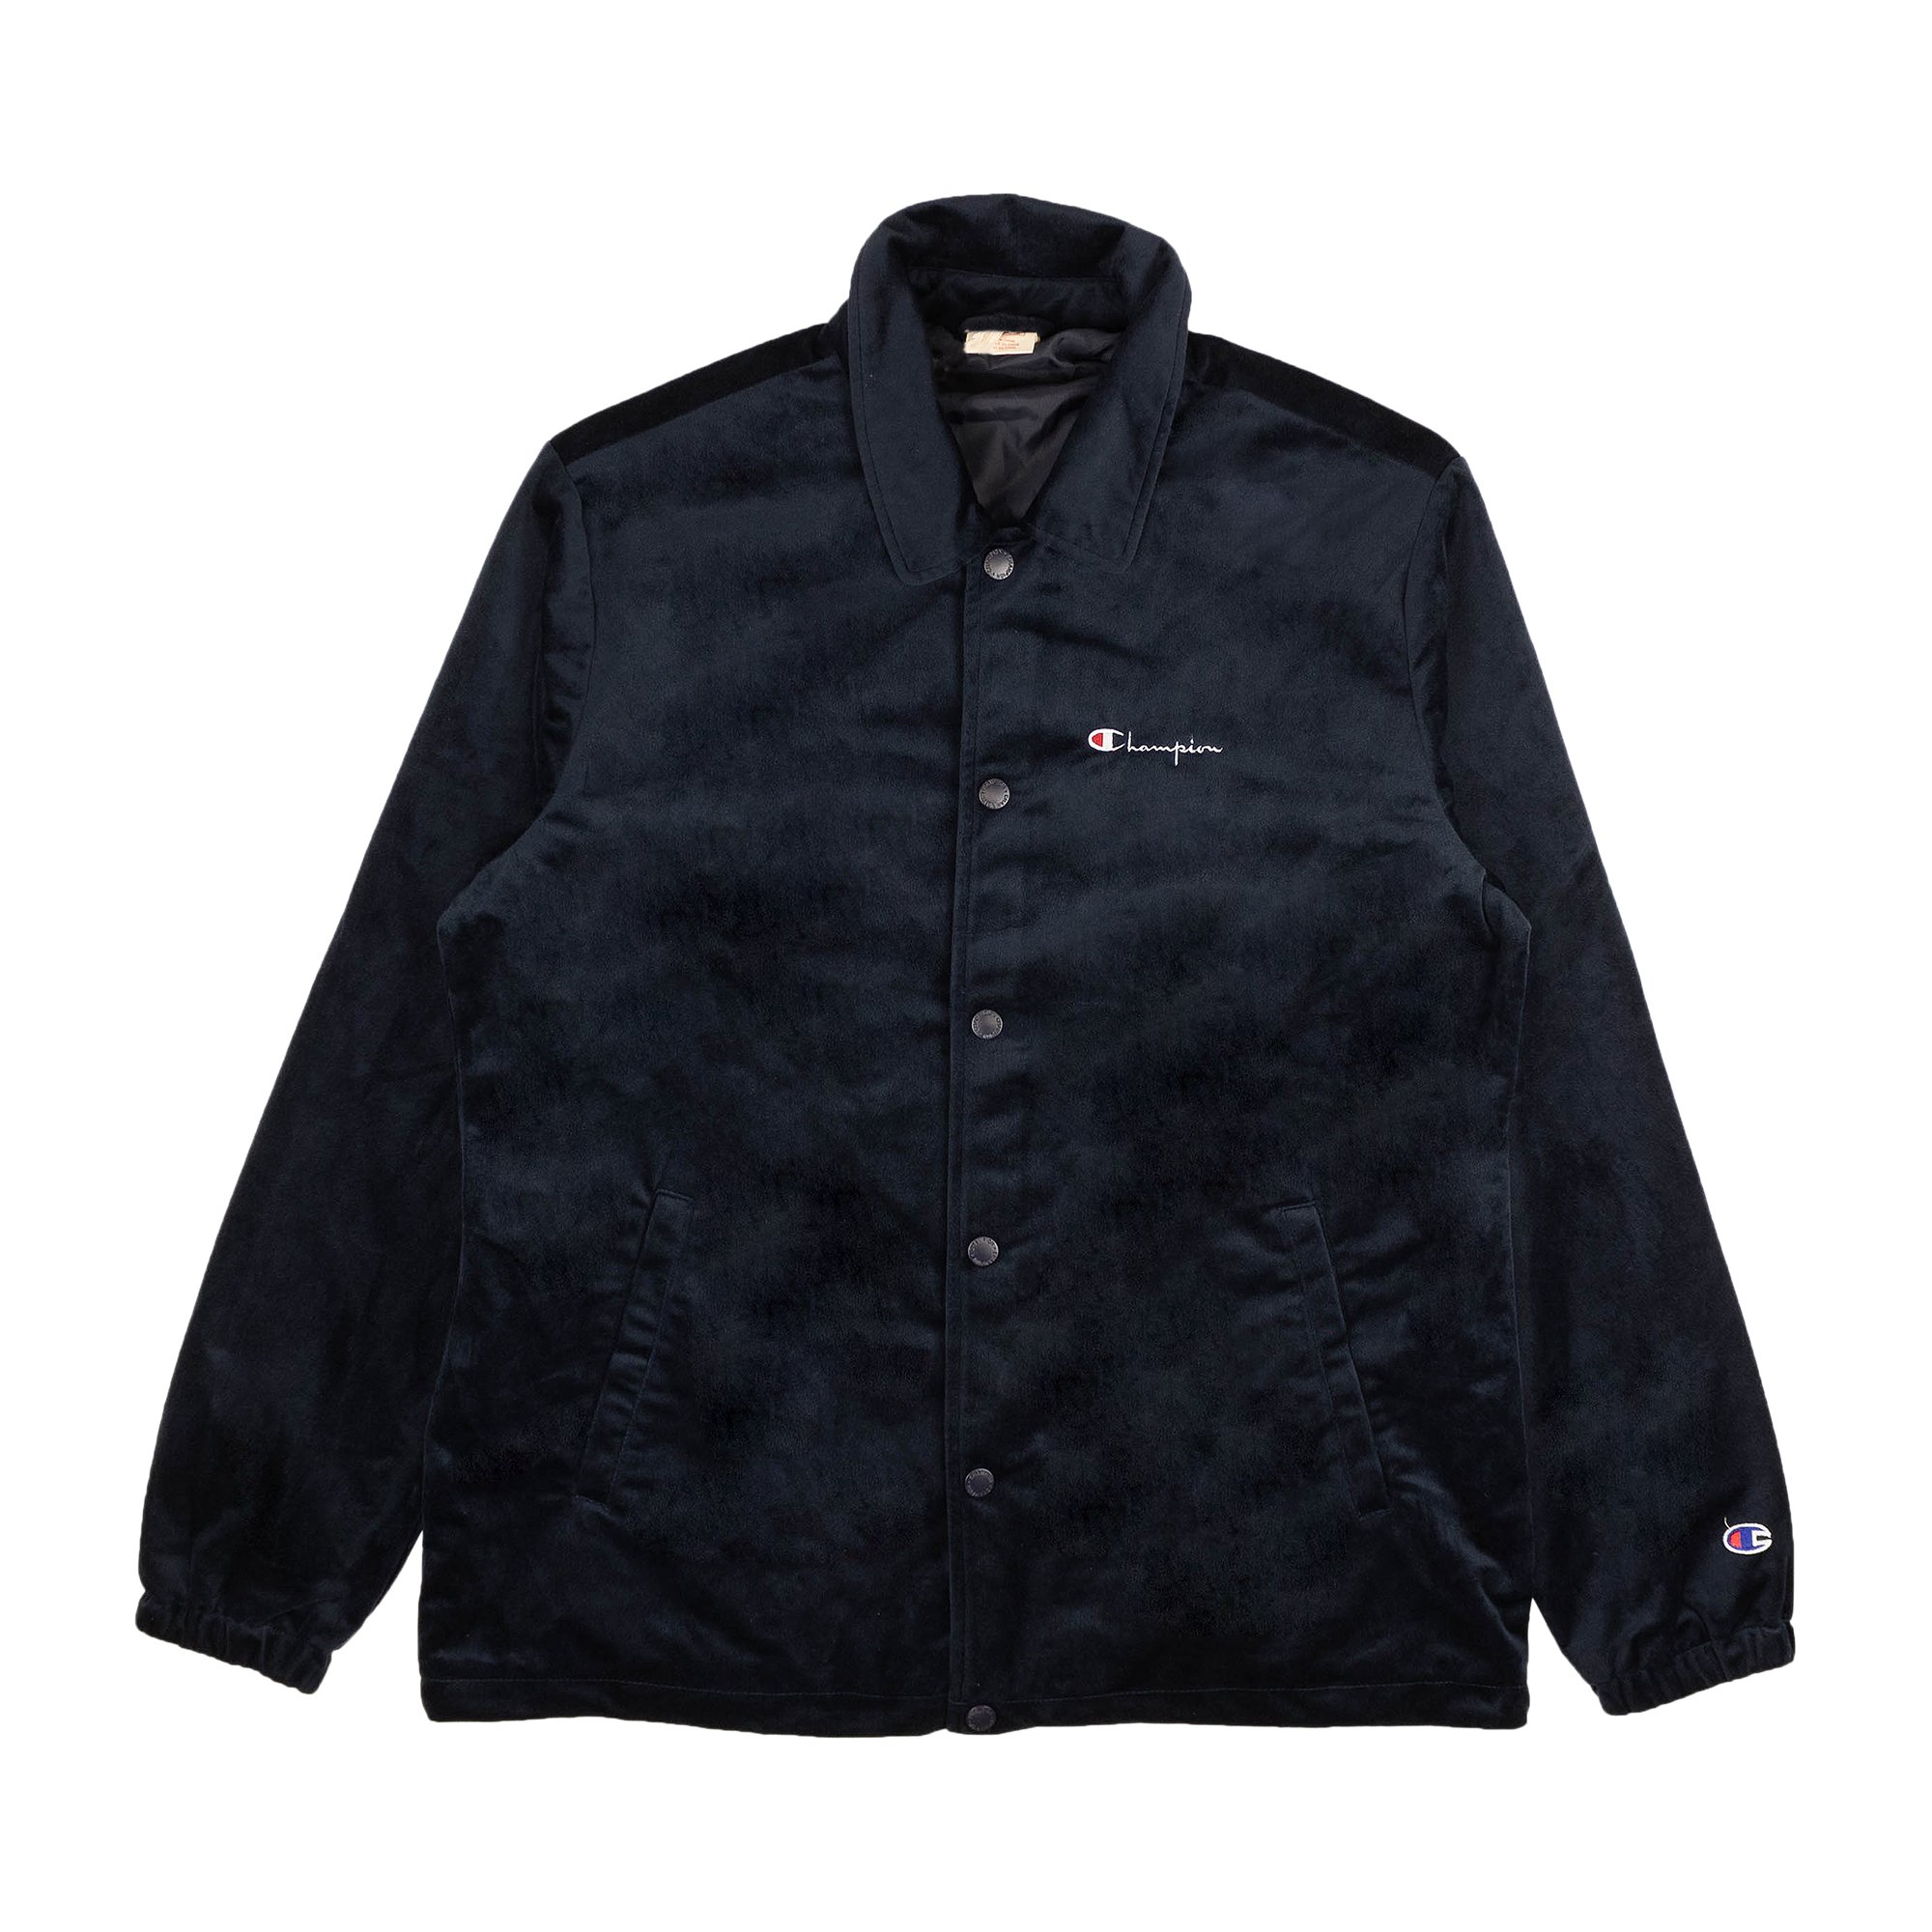 GAVIAL cotton velvet coach jacket 【在庫有】 15300円 sandorobotics.com